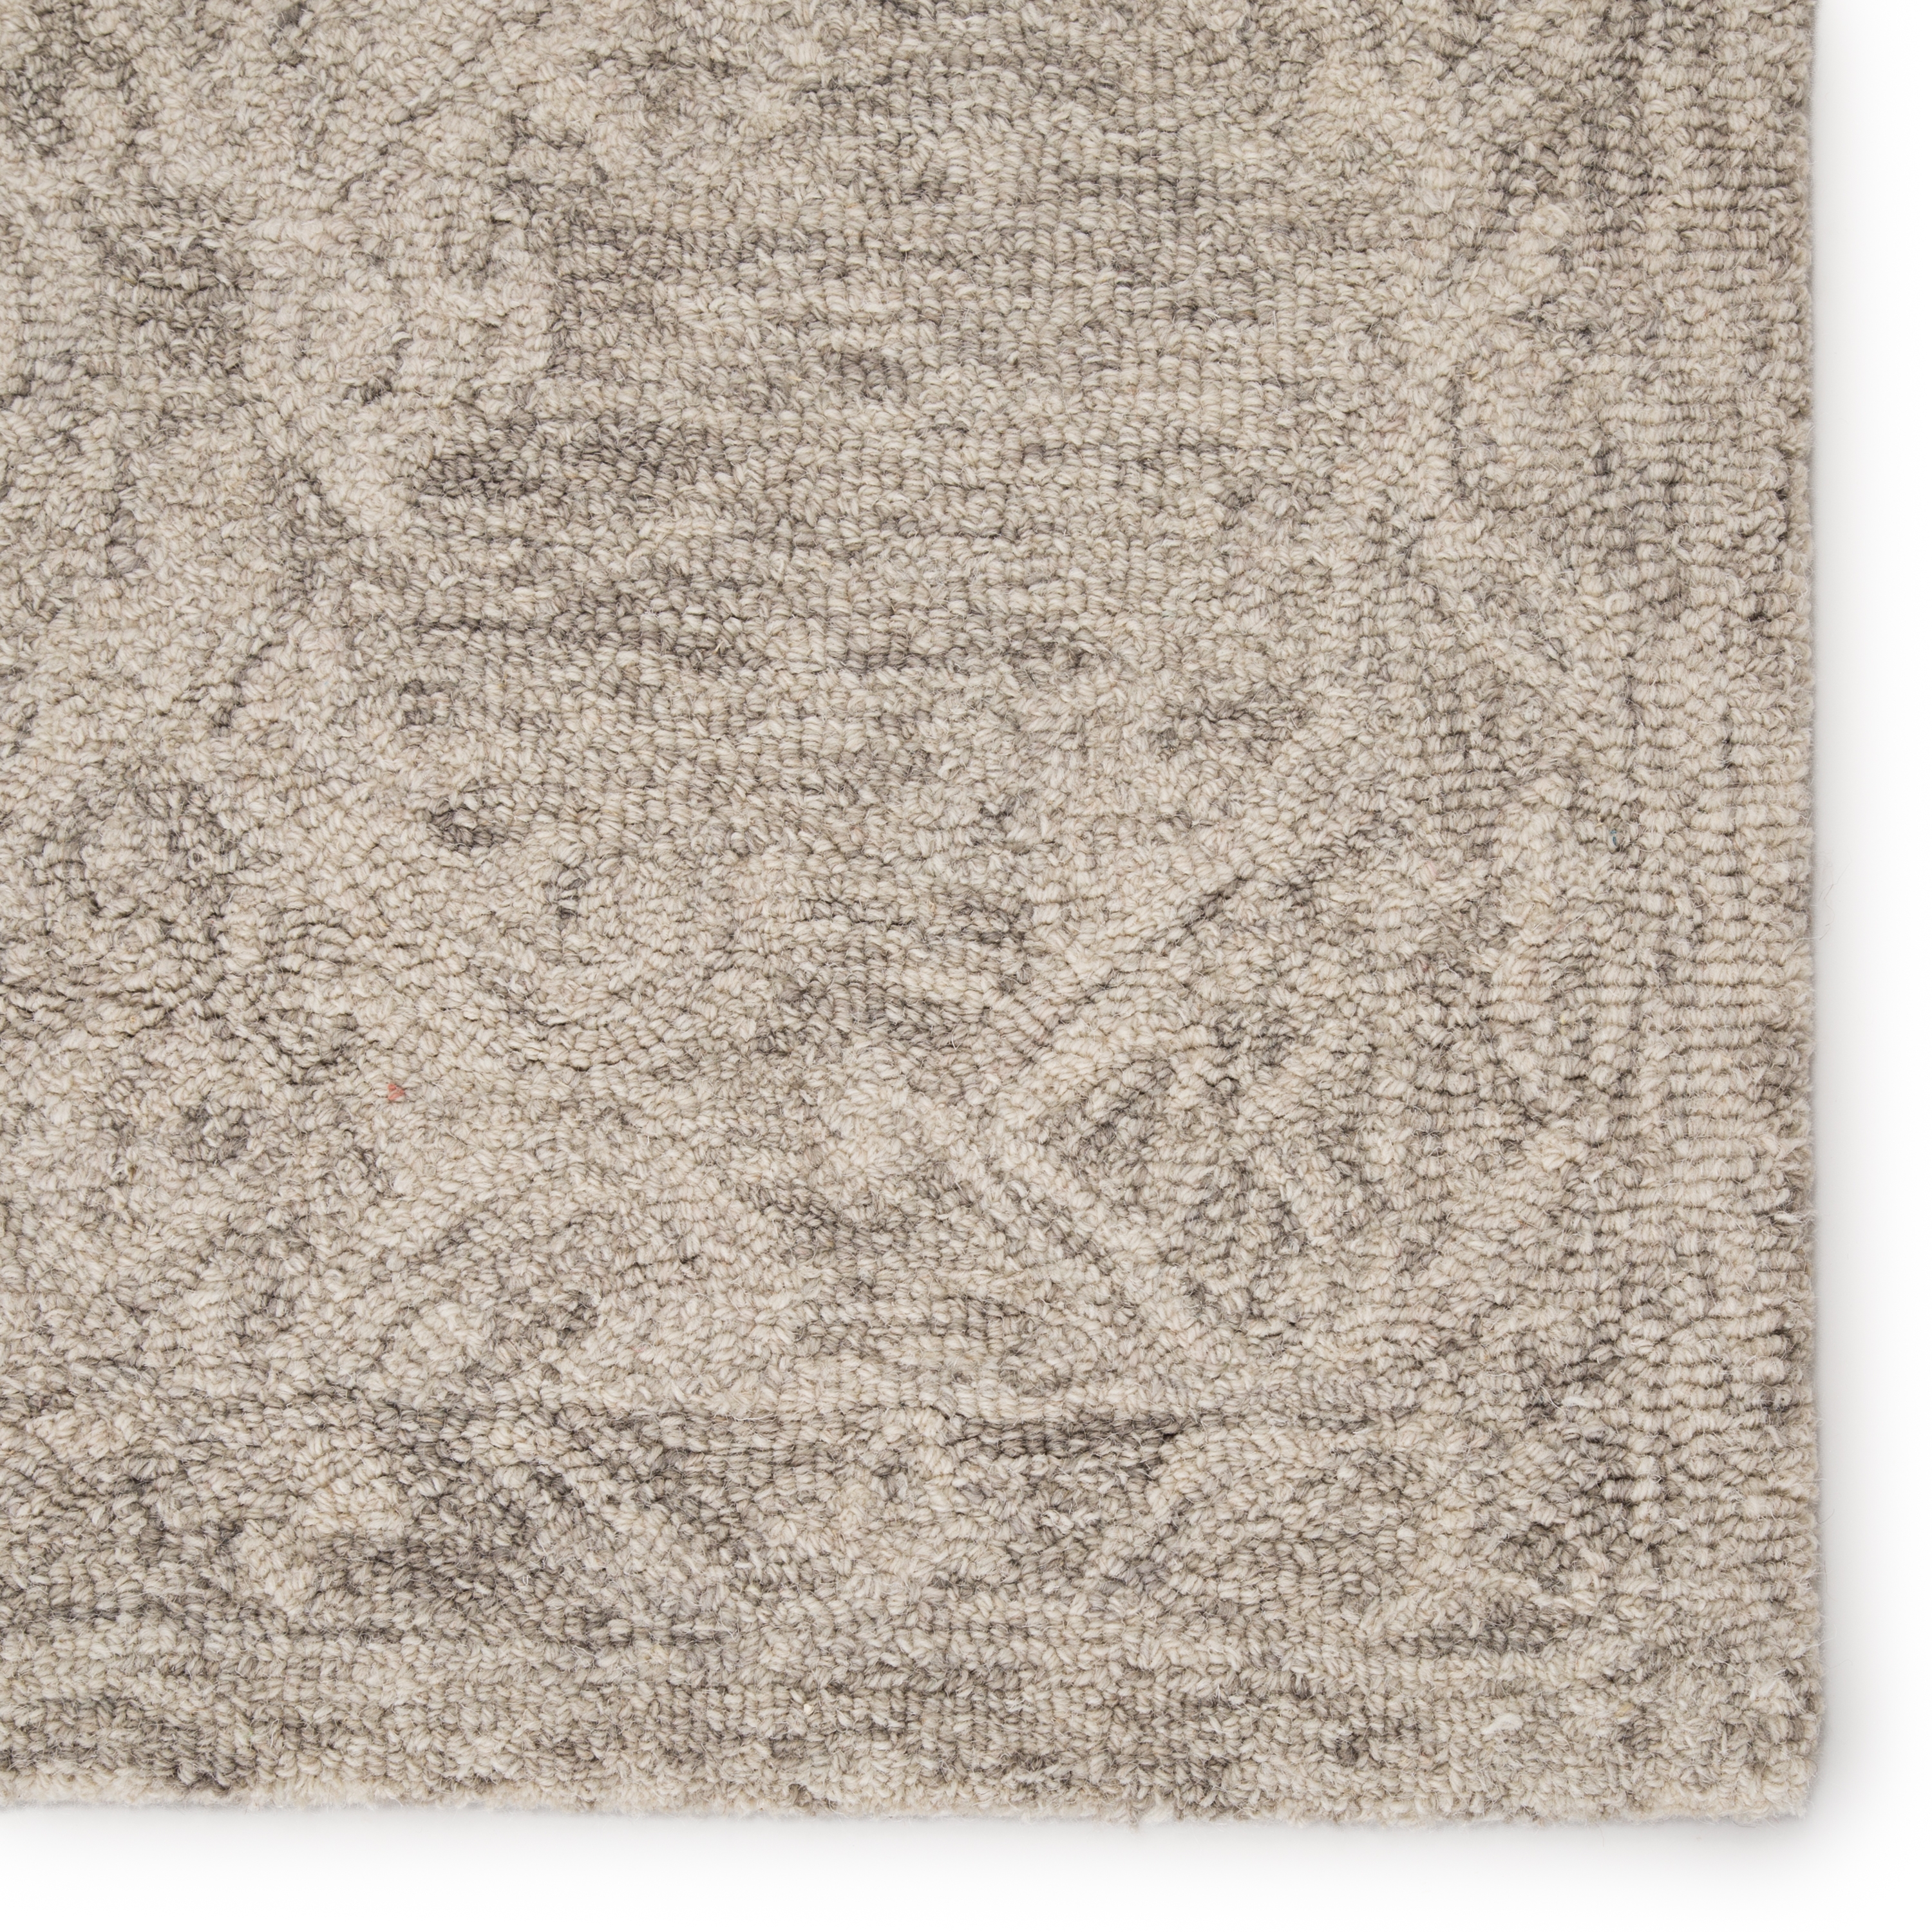 Corian Handmade Trellis Gray Area Rug (10'X14') - Image 3